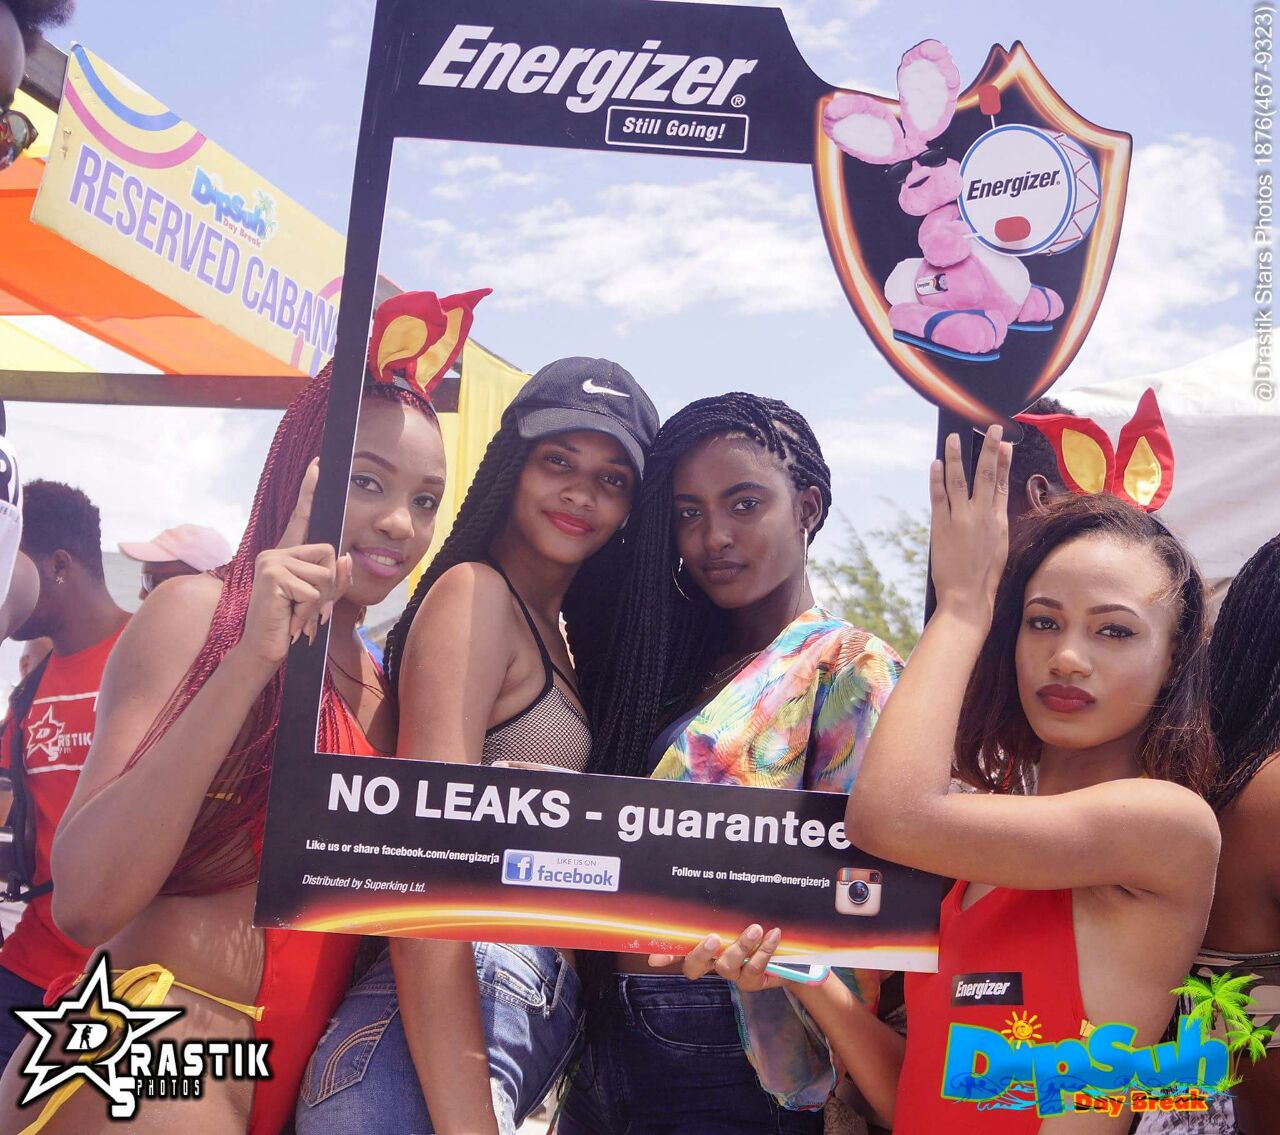 Energizer girls holding frame while girls with braids pose